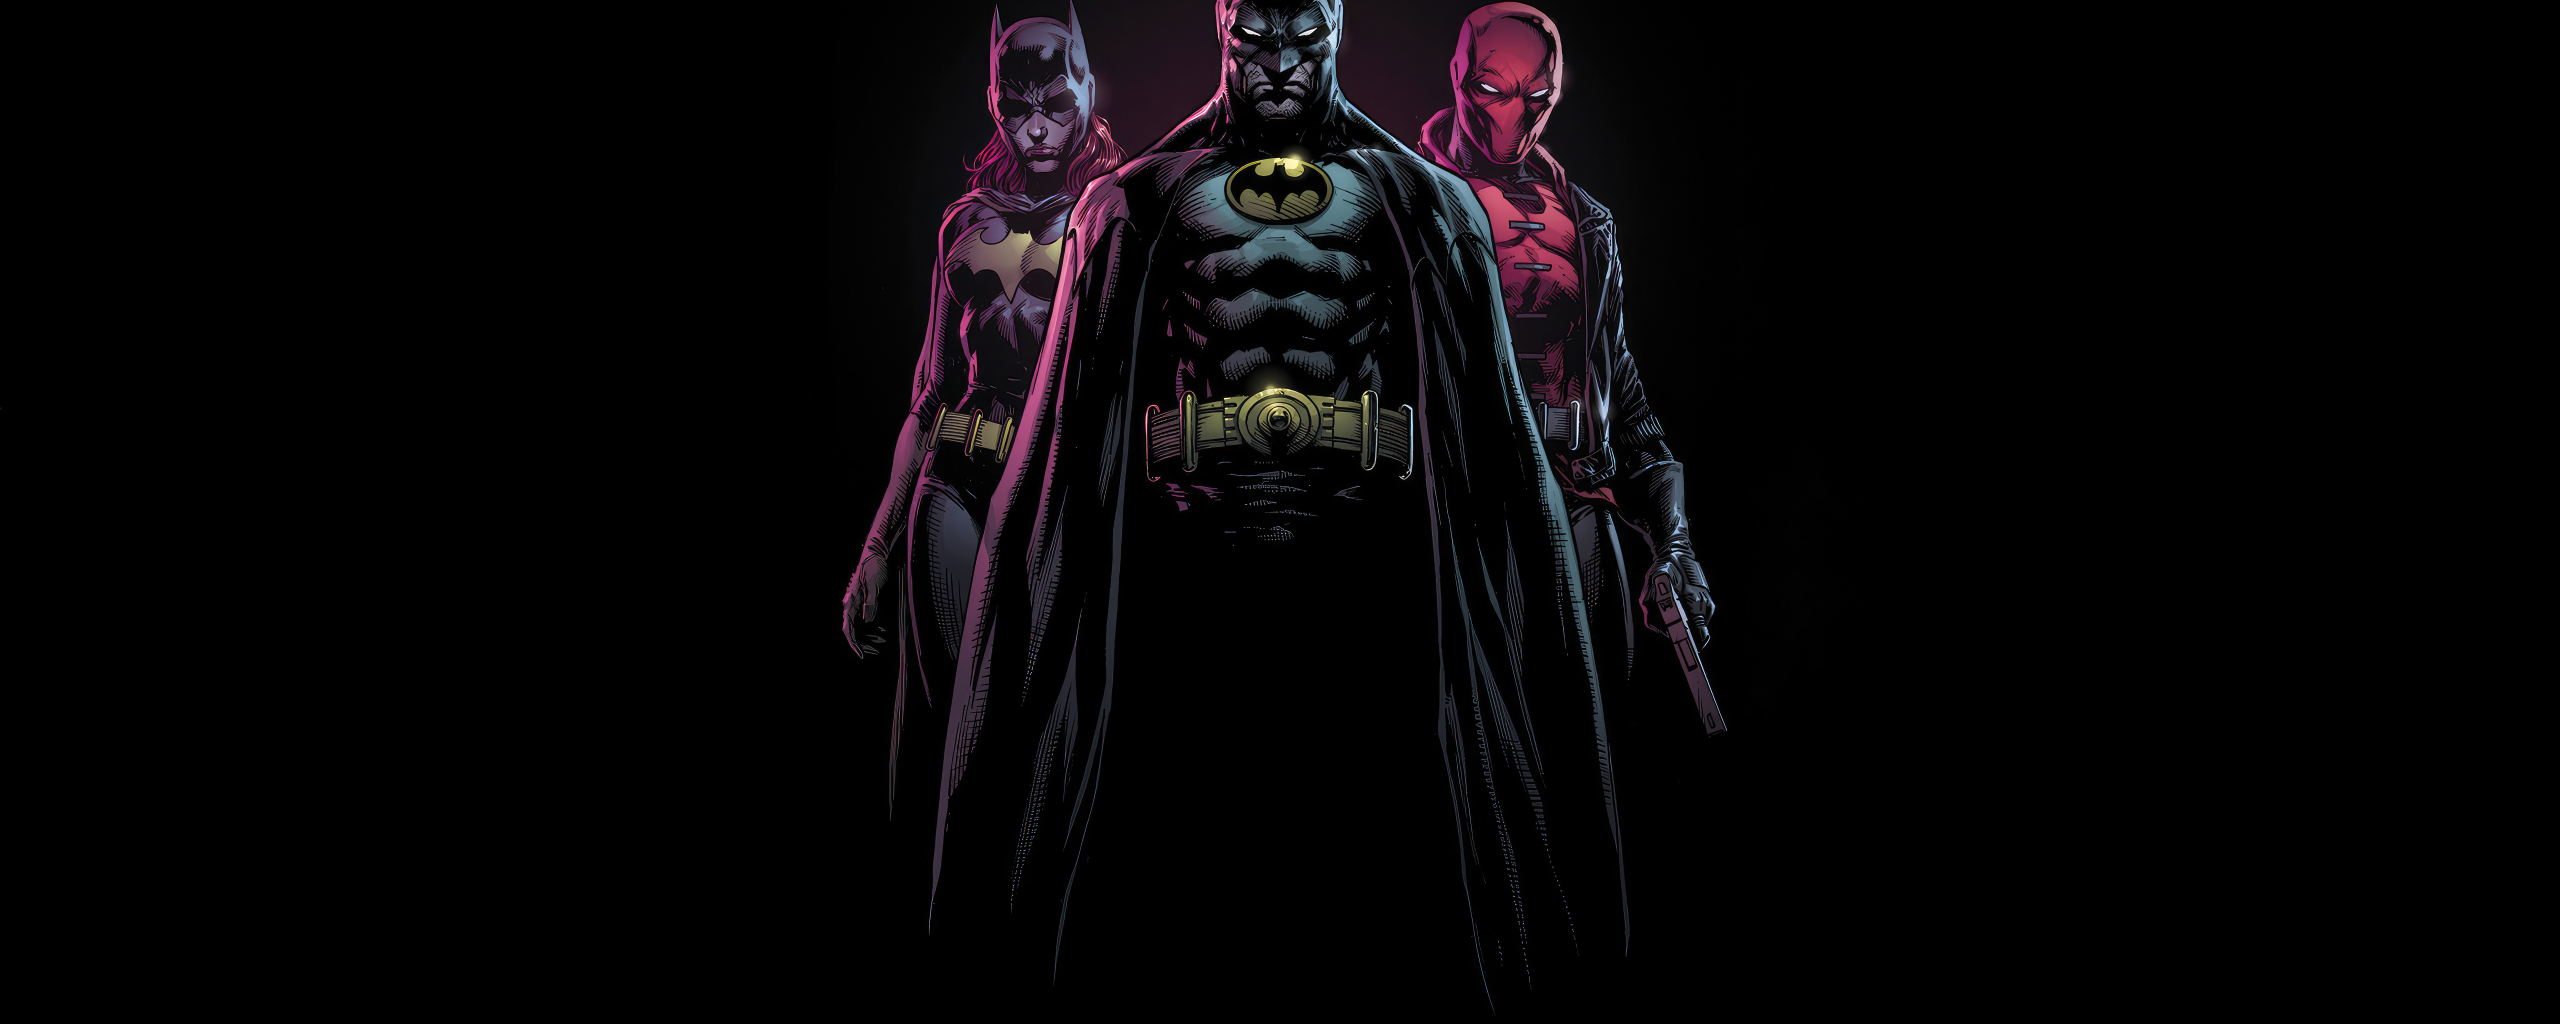 Bat-family, superhero, 2560x1024 wallpaper